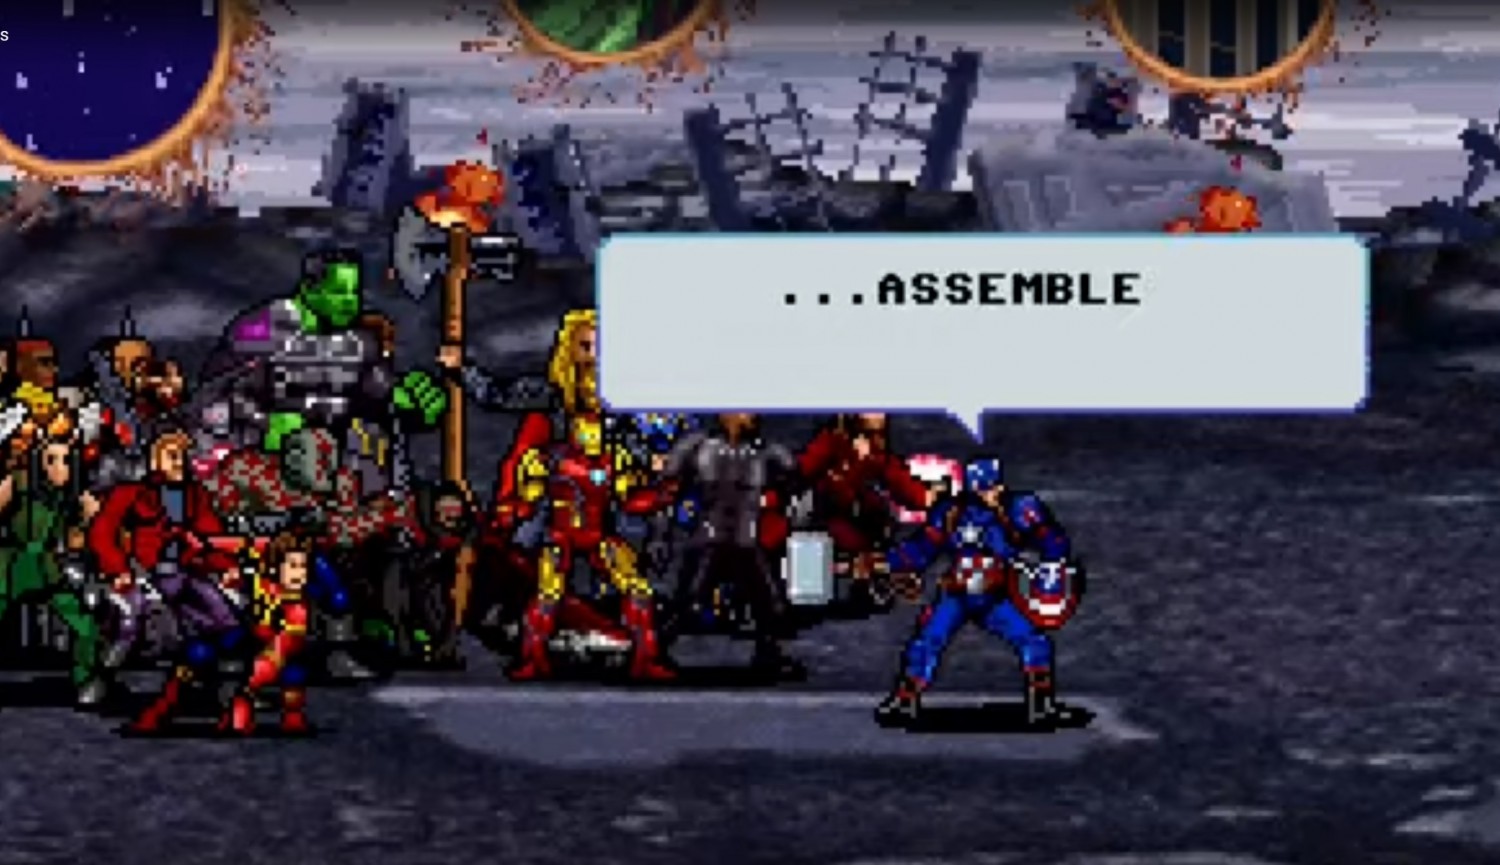 The Avengers assemble for one final battle in Endgame